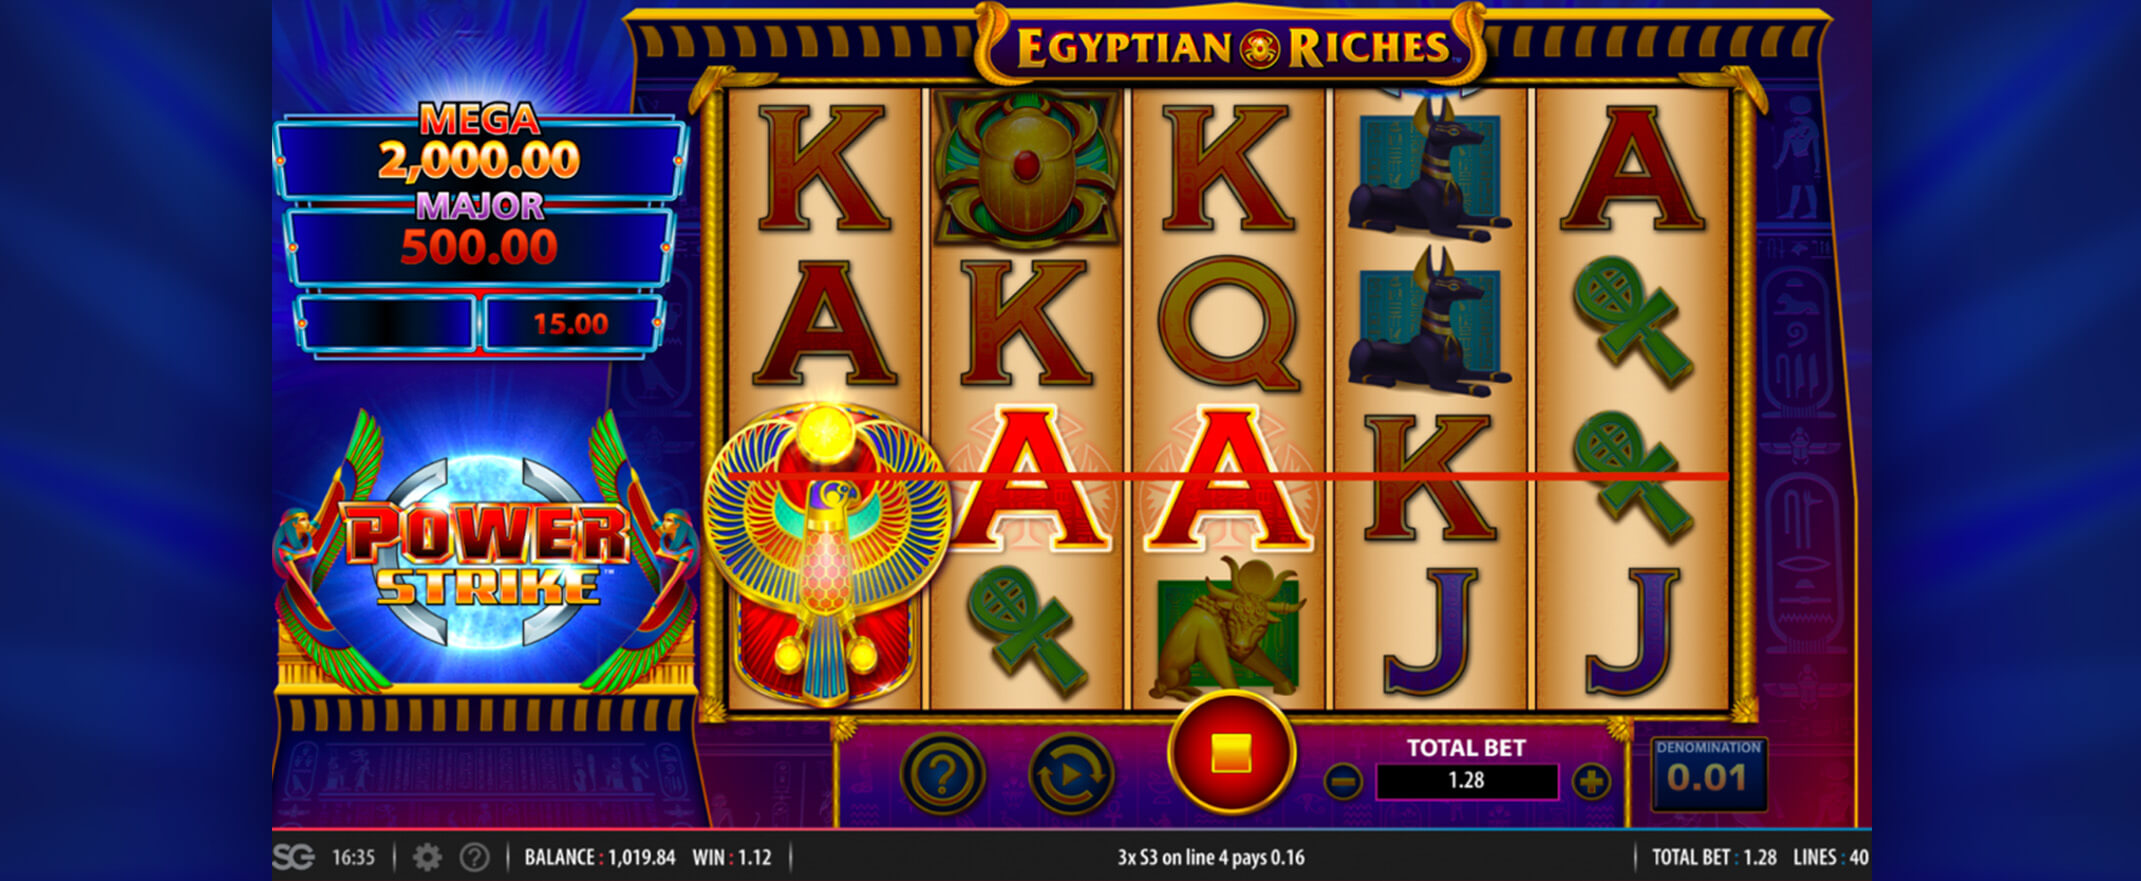 Power Strike Egyptian Riches slot screenshot